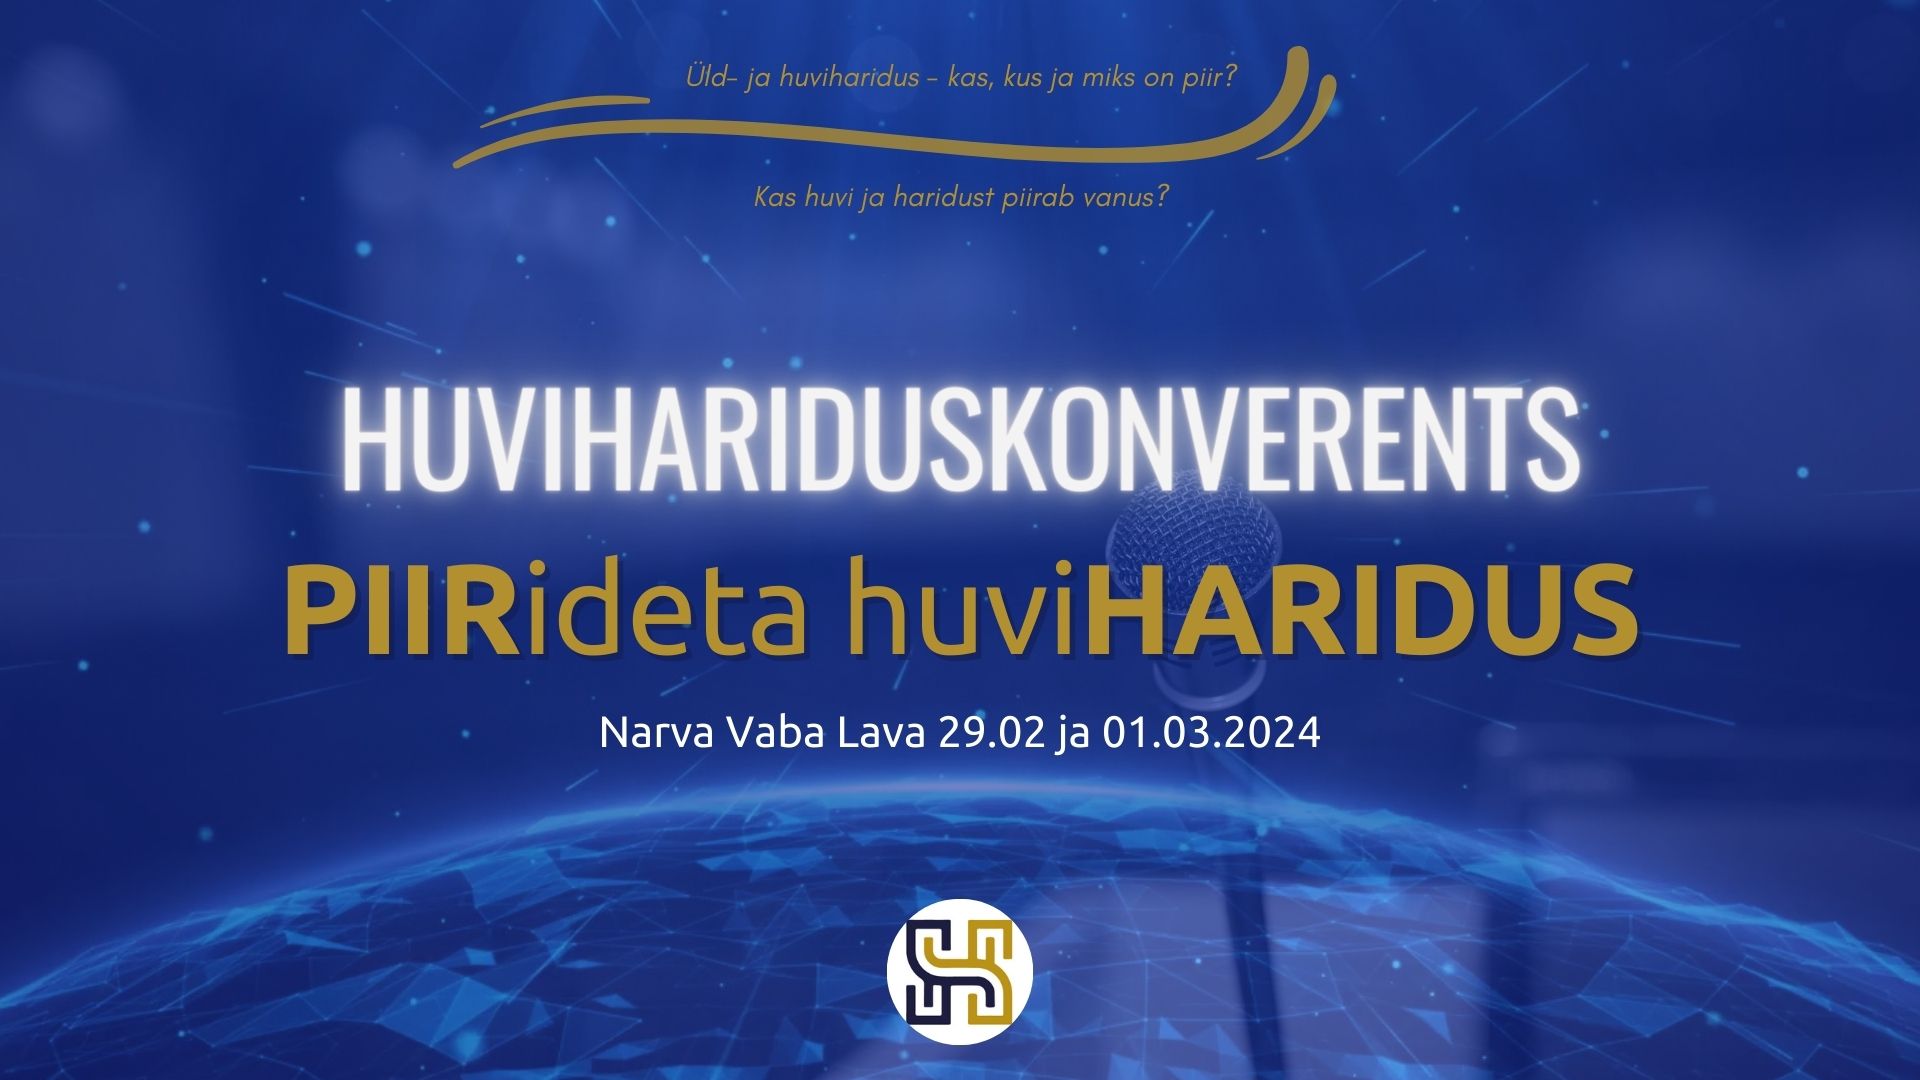 Huvihariduskonverents PIIRideta huviHARIDUS toimub Narvas 29_02 – 01_03_2024